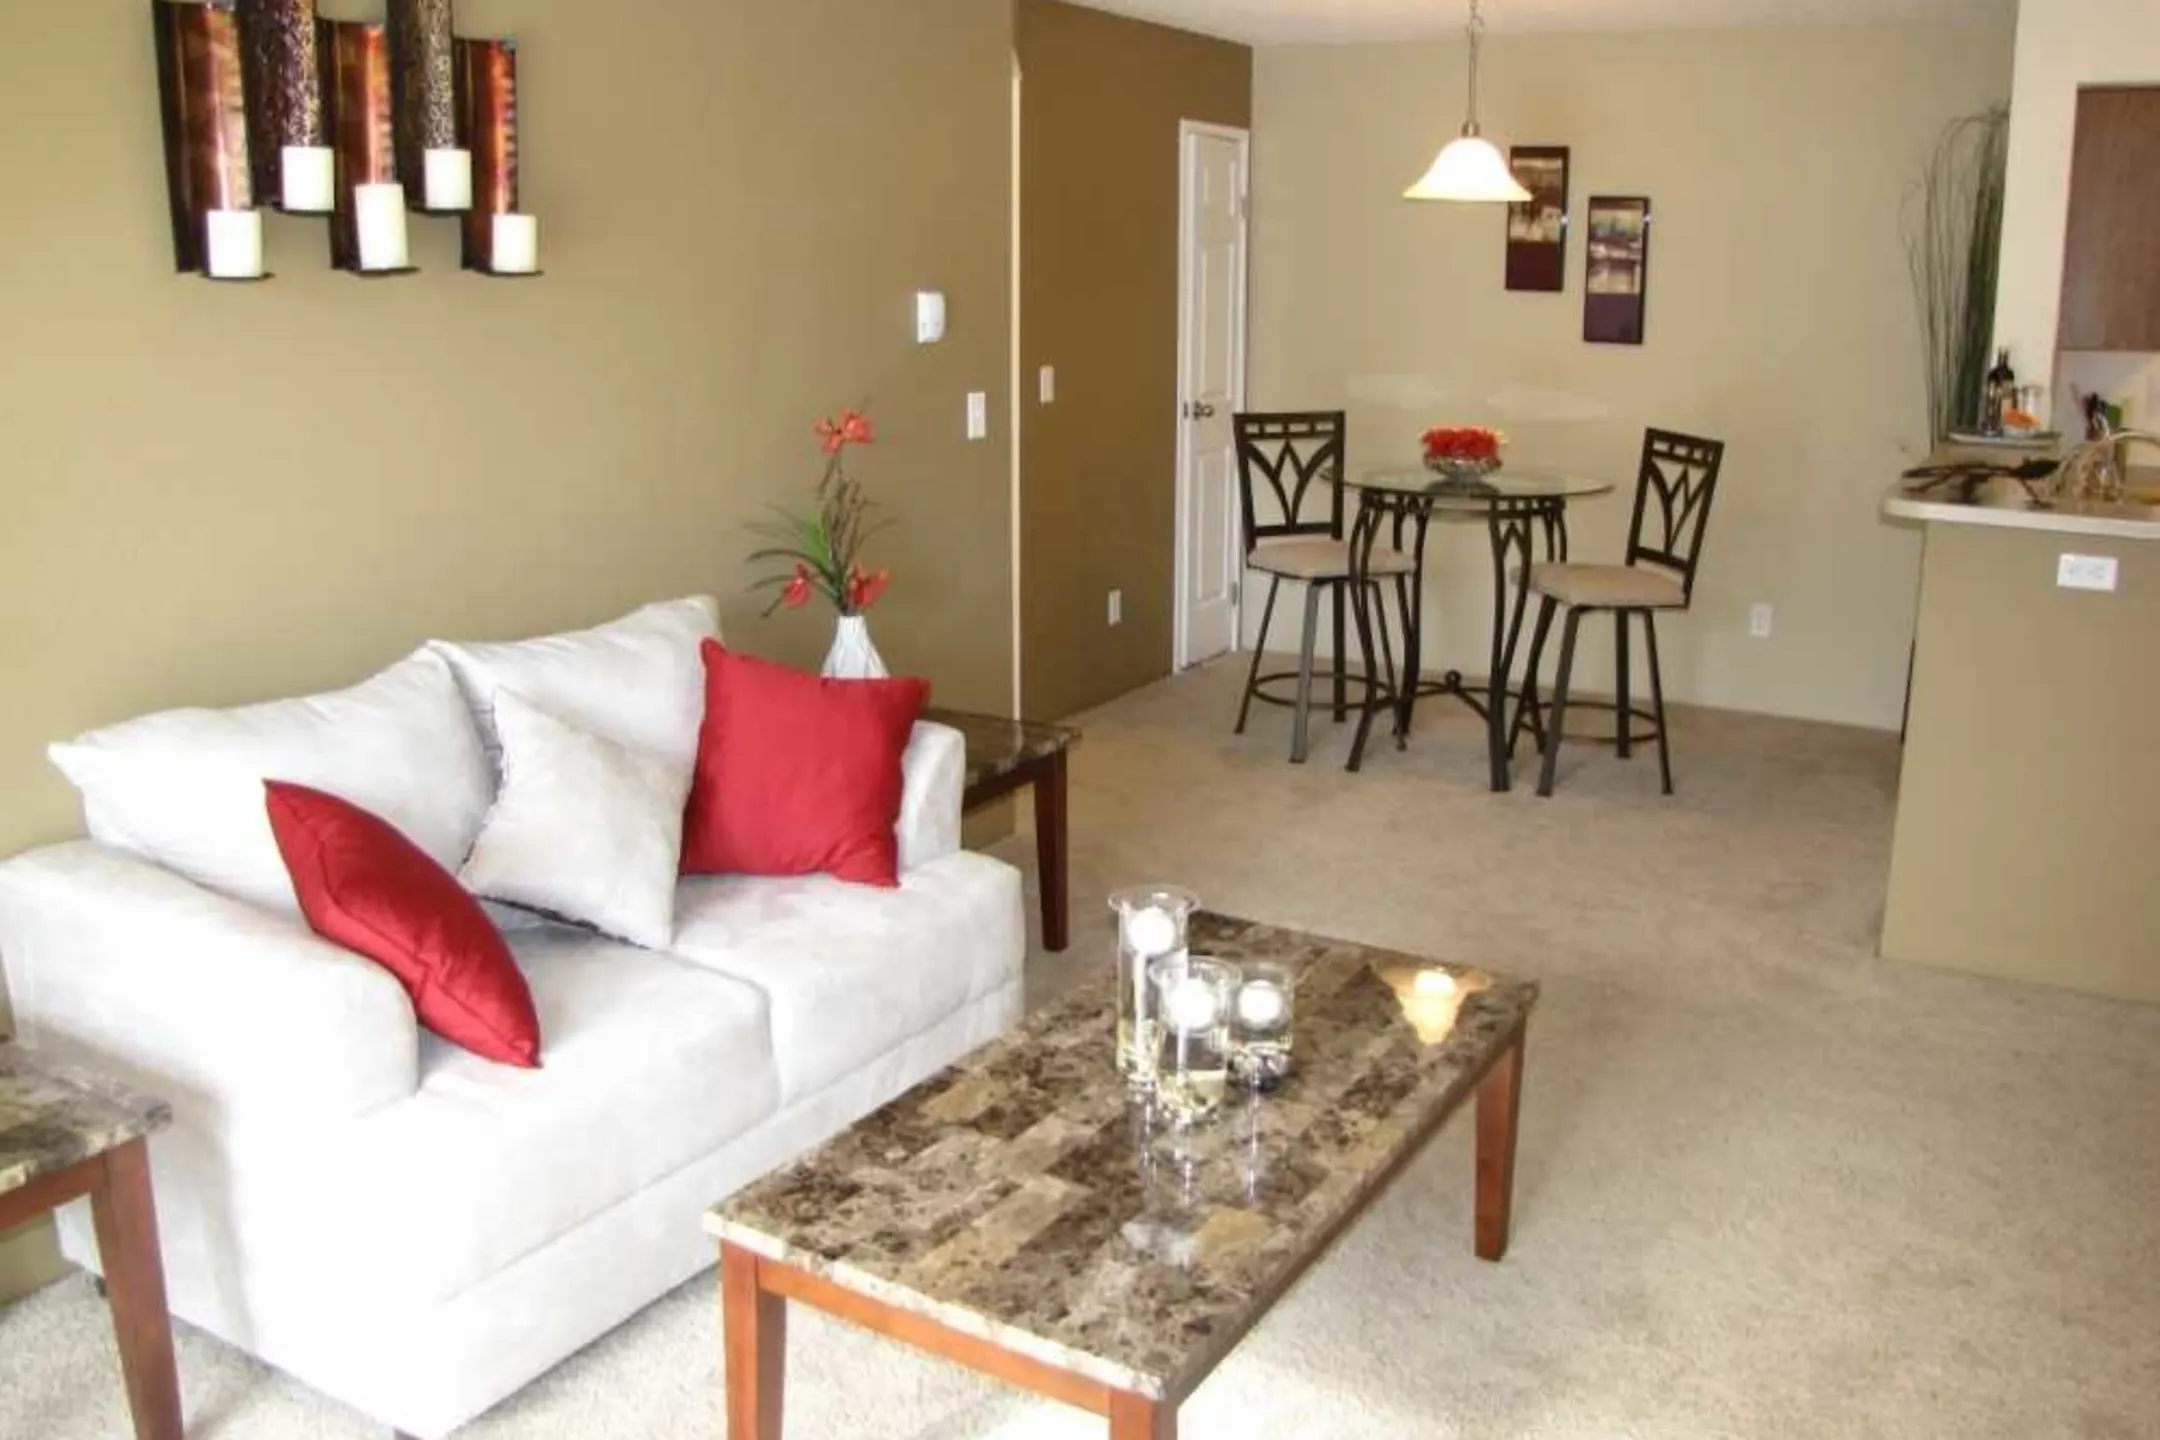 Living Room - Hunters Run Apartments - Denver, CO